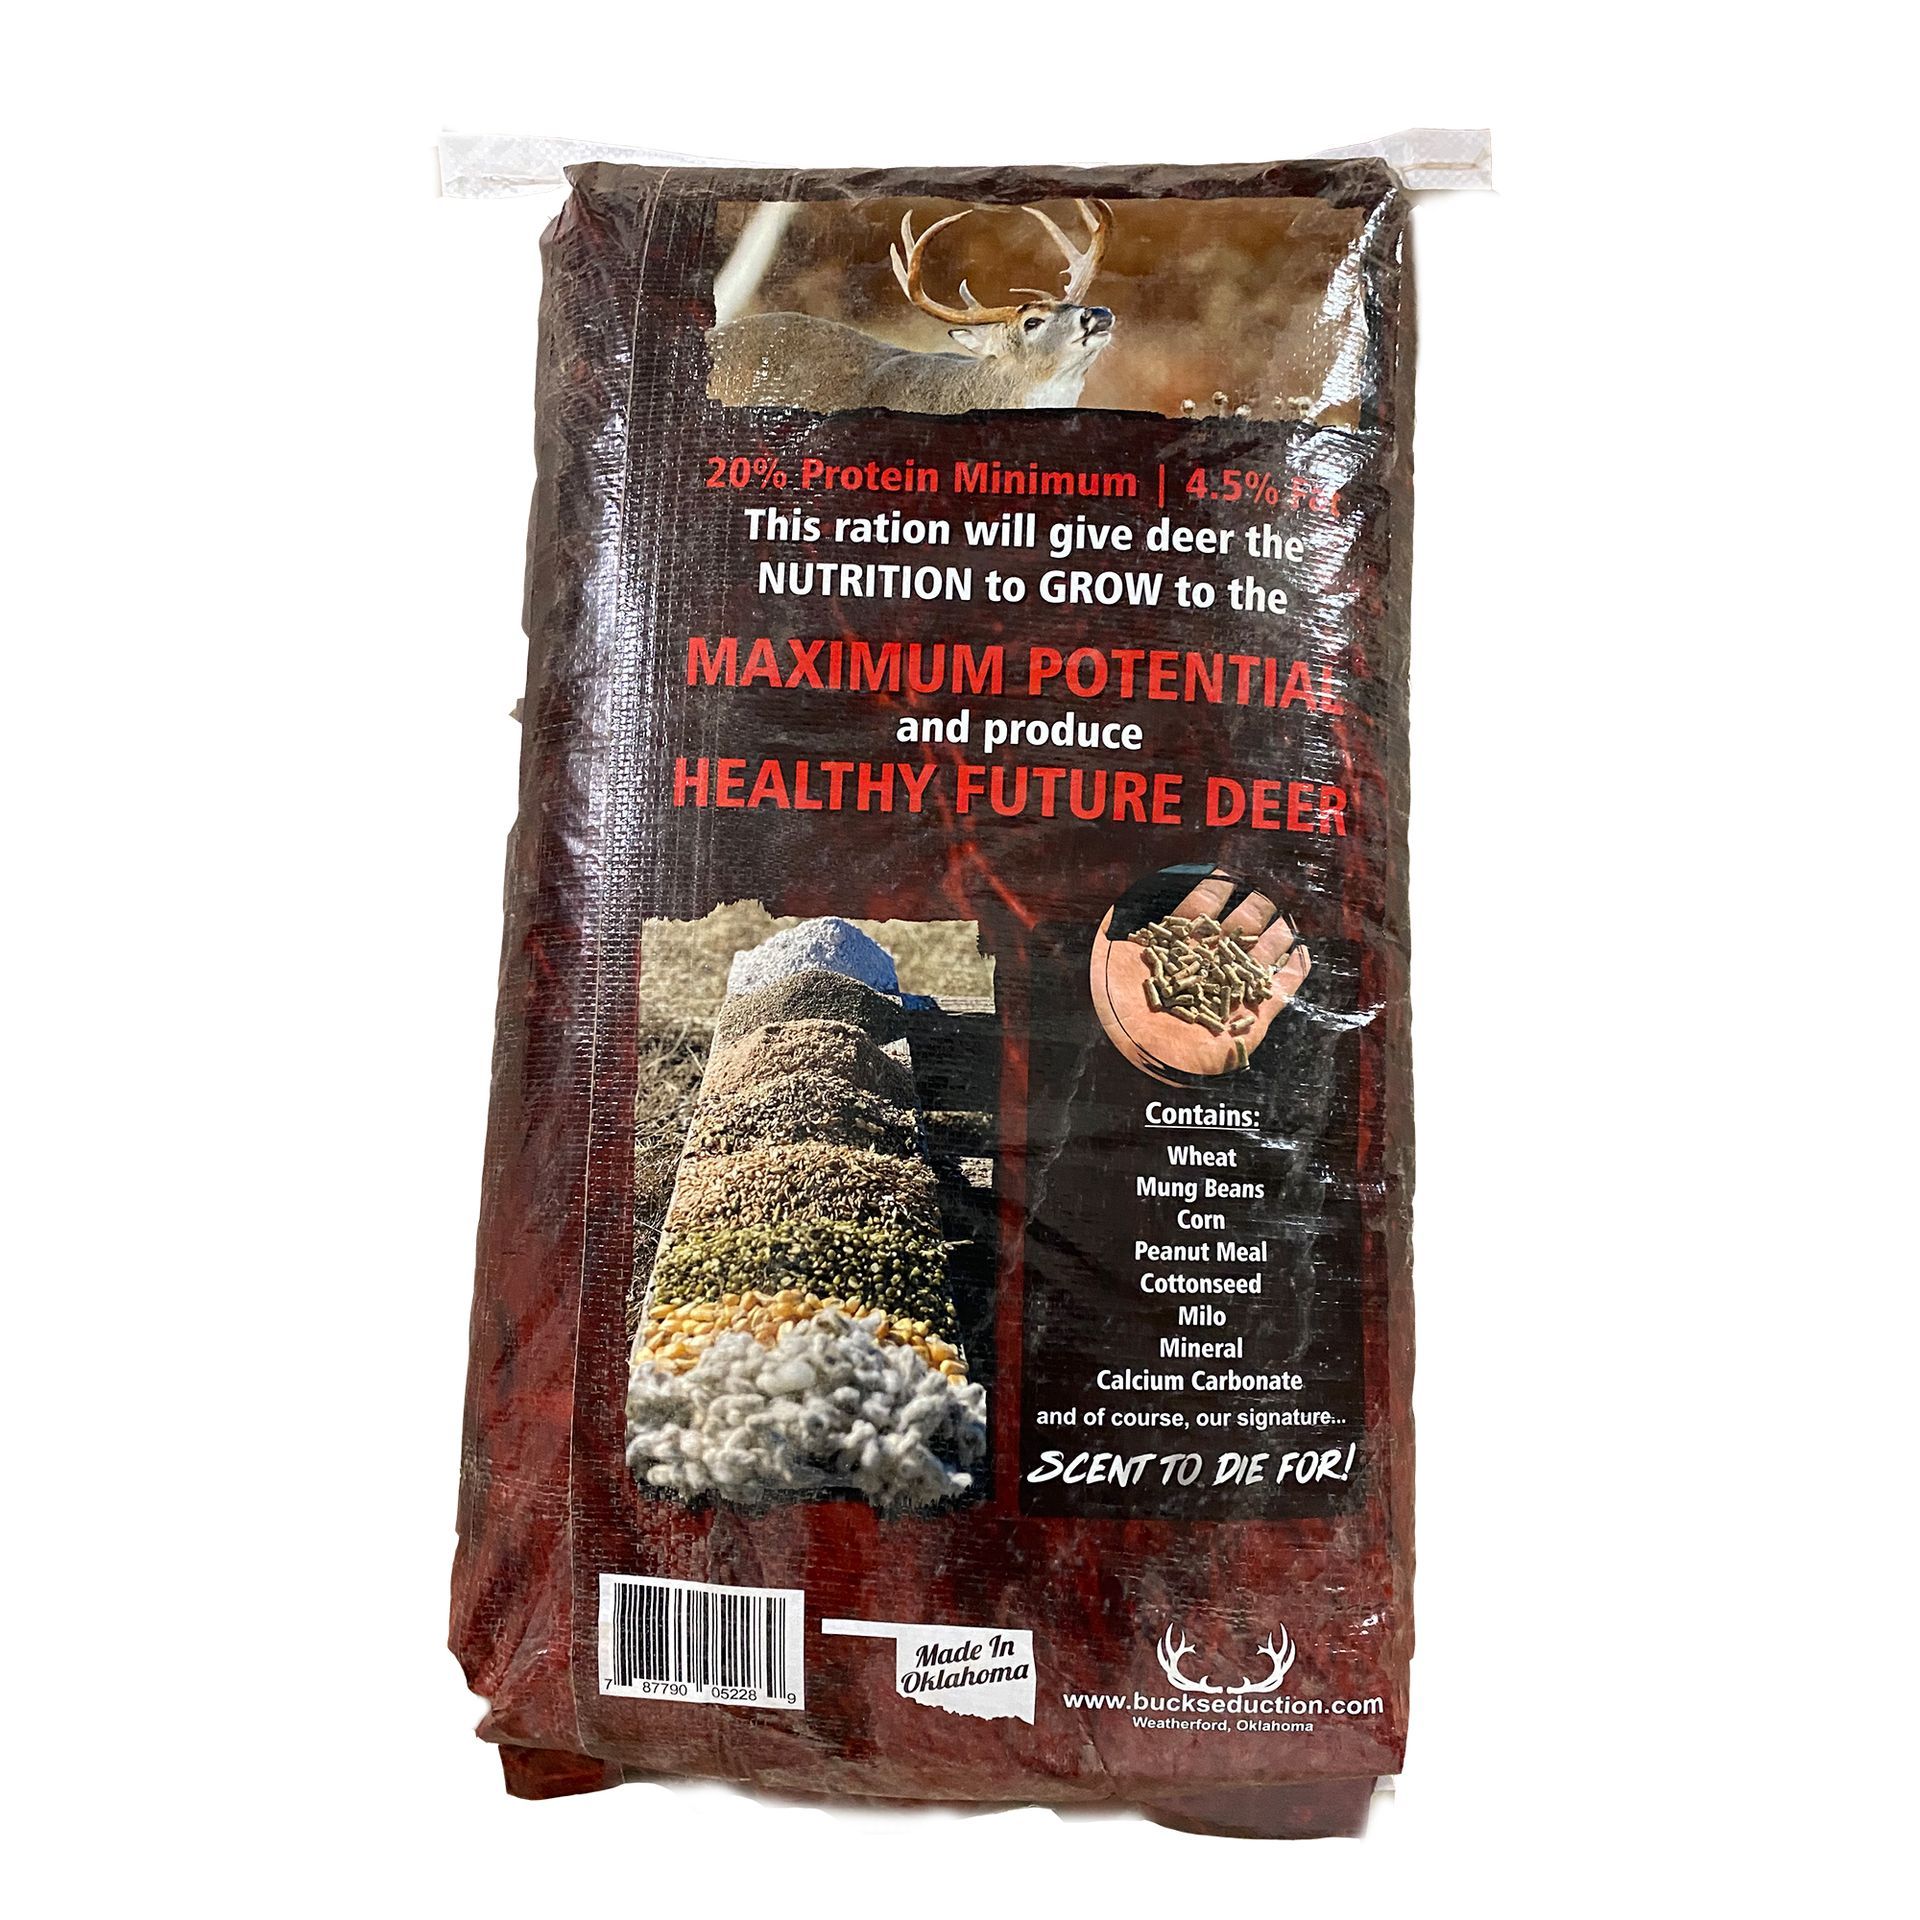 A bag of food that says maximum potential healthy future deer 